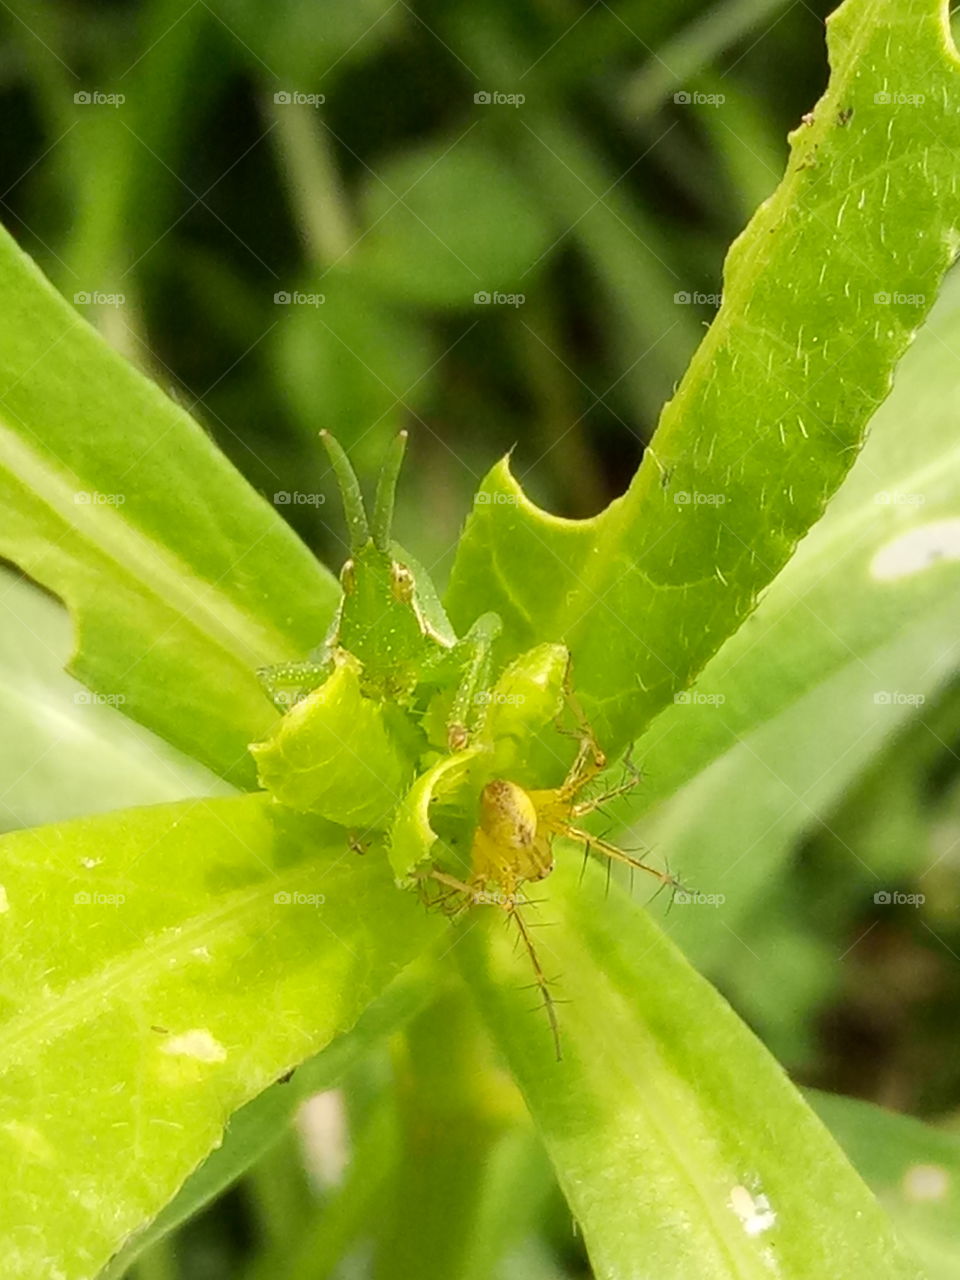 grasshopper and spider at a leaf 2 side